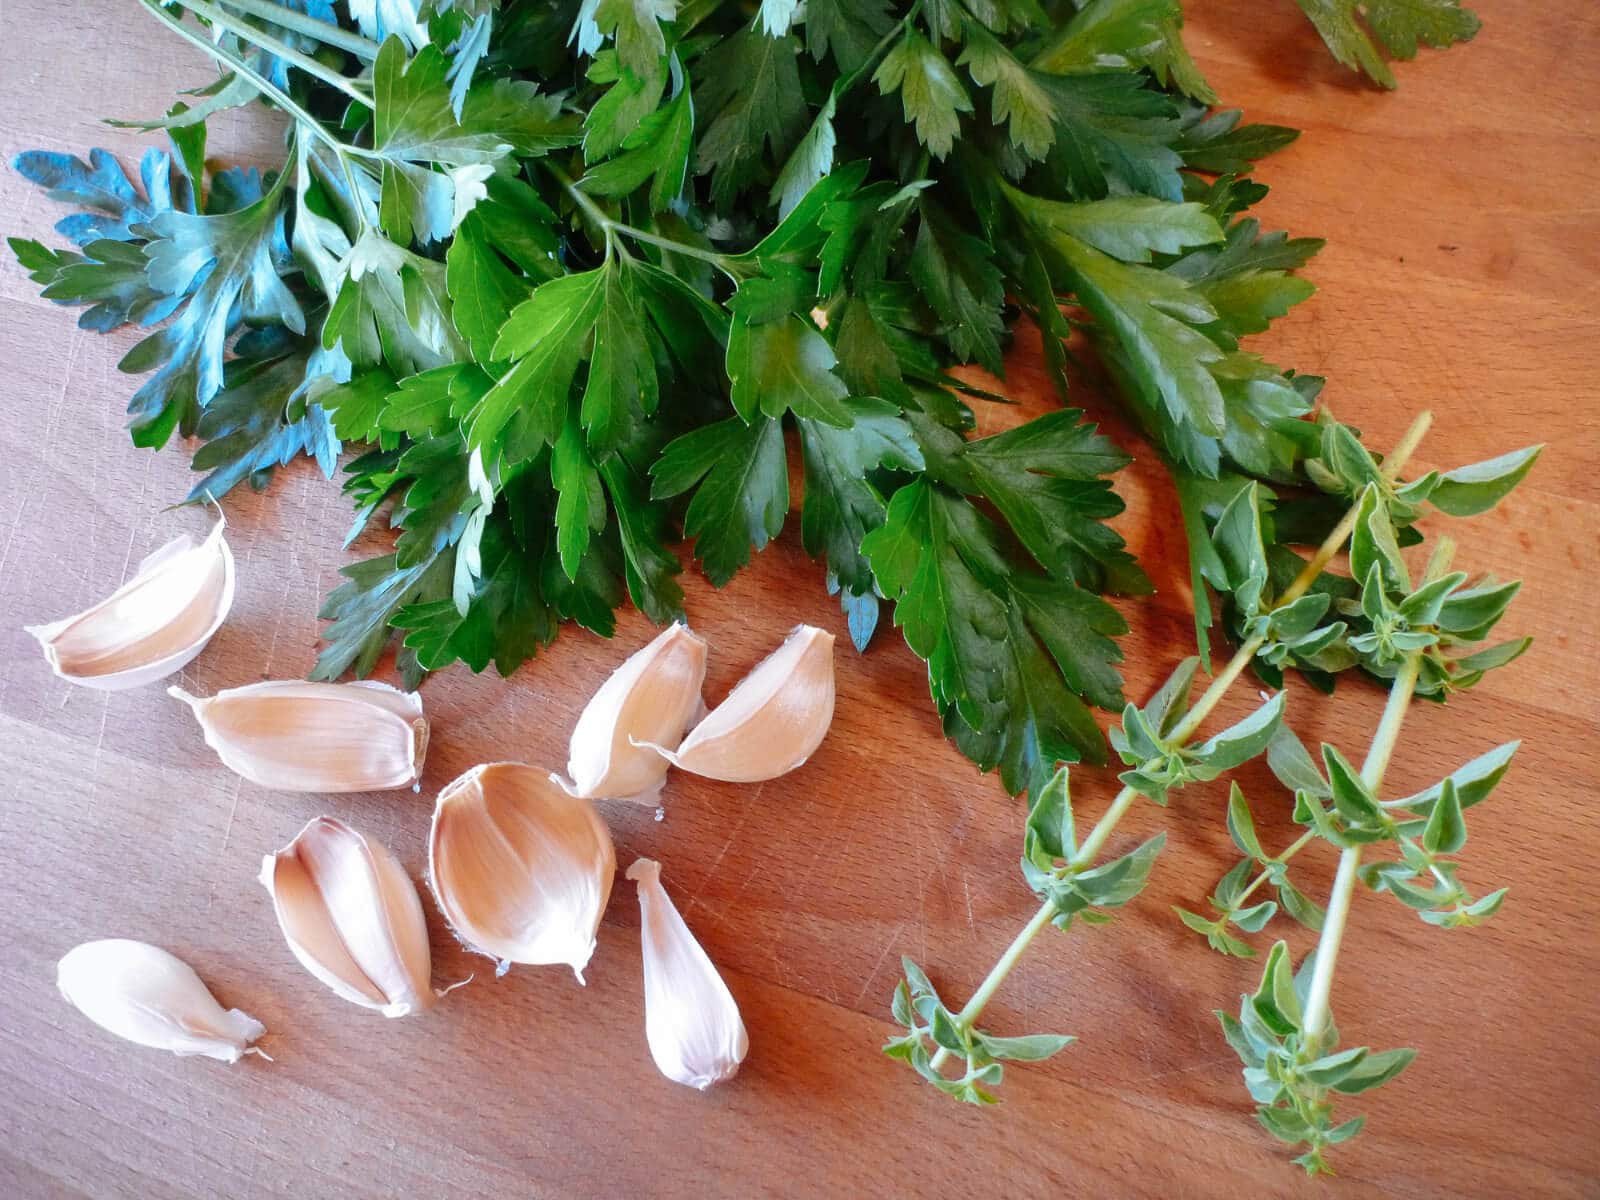 Parsley, garlic, and oregano for making chimichurri